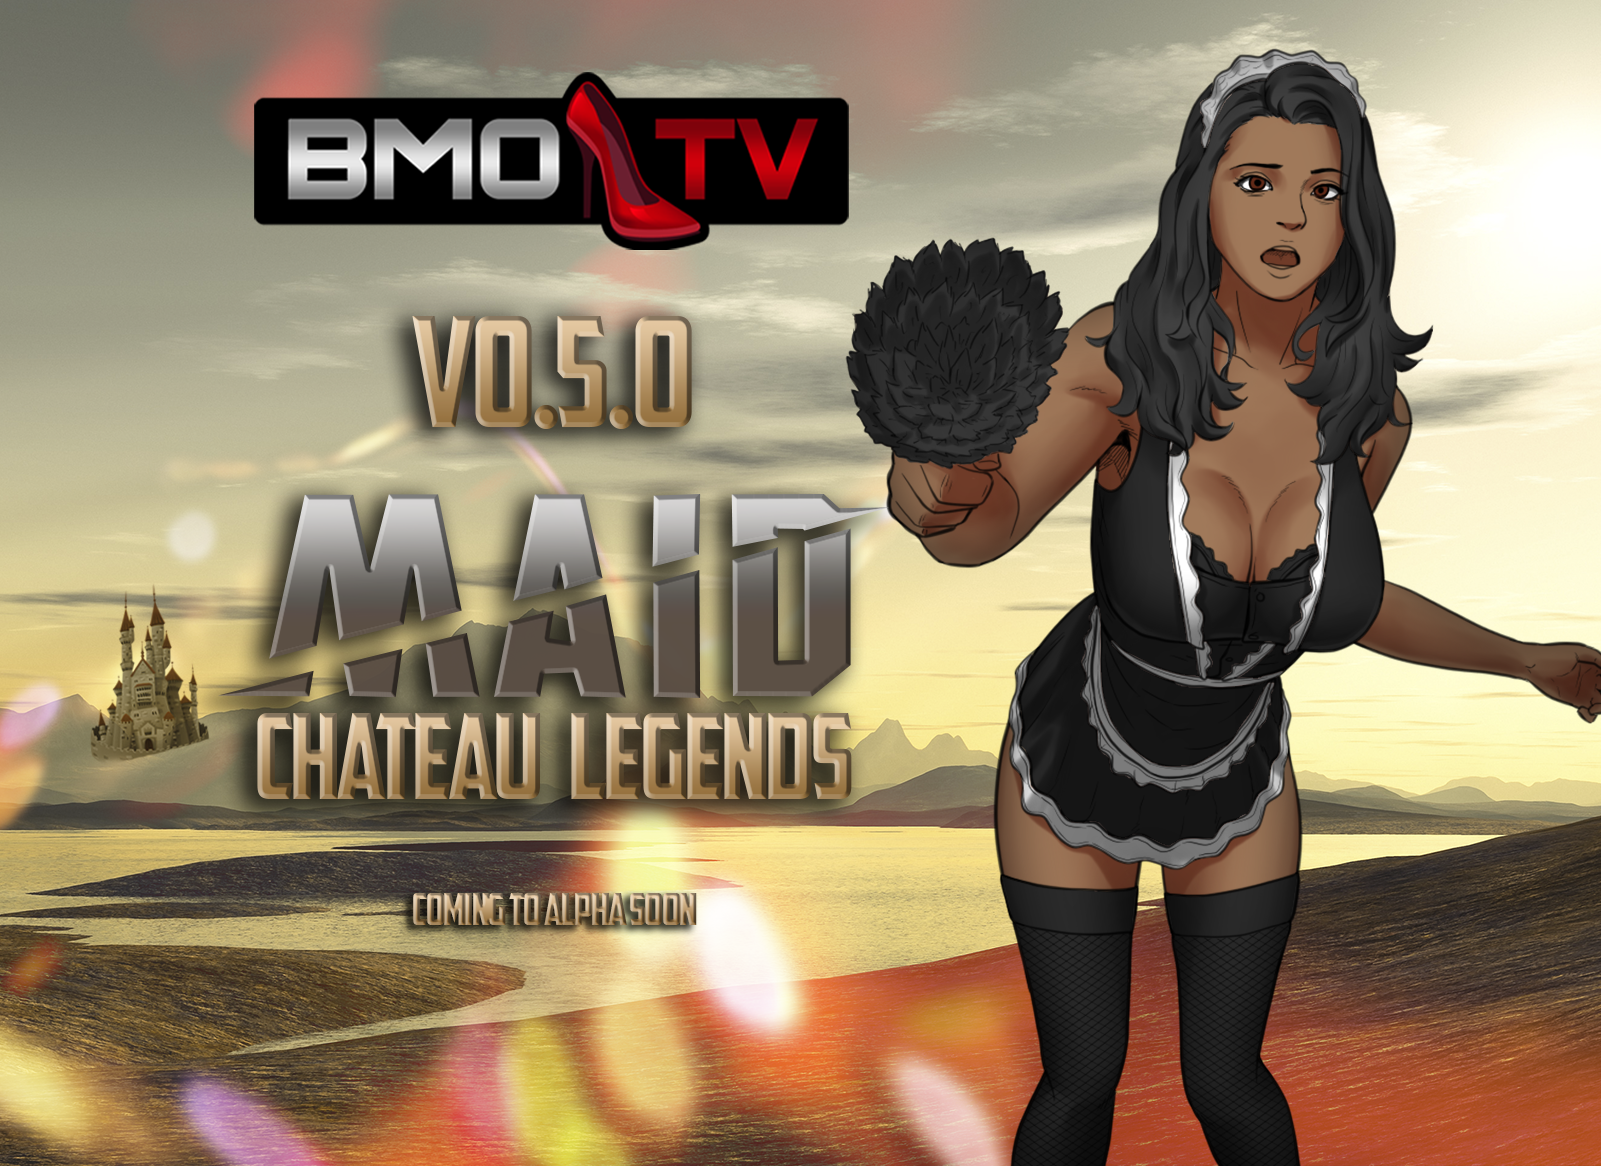 Bmo tv v0.5.0 Maid Chateau Legends